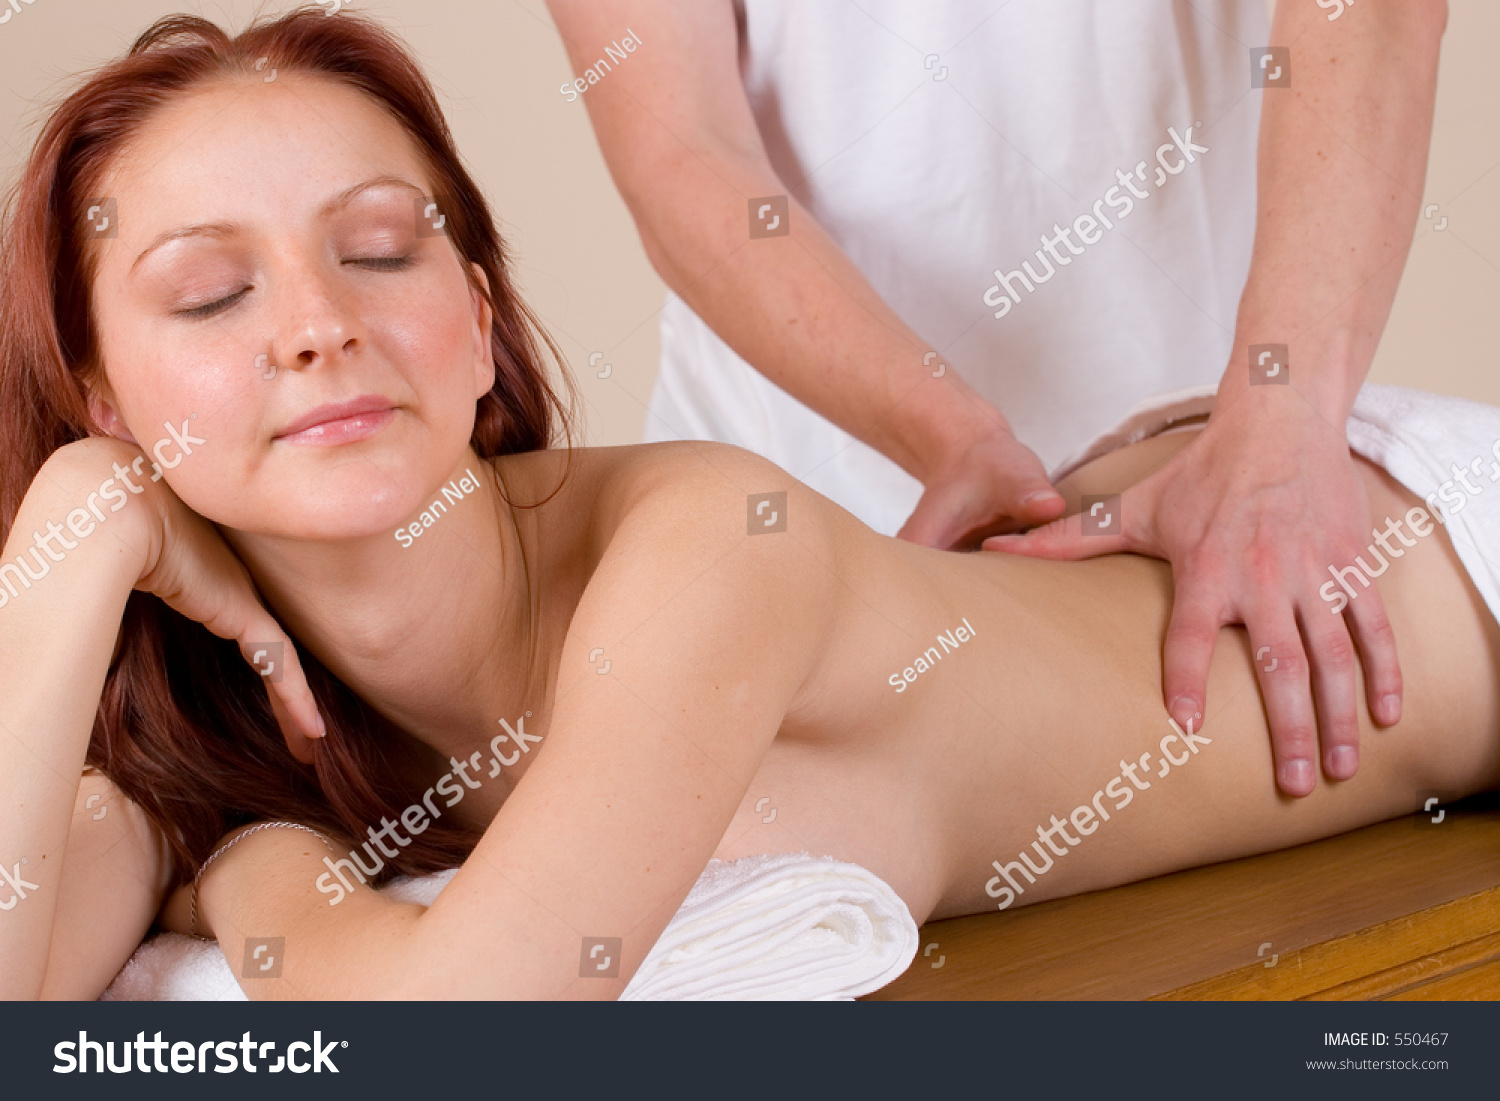 Девка пришла за массажем а получила секс